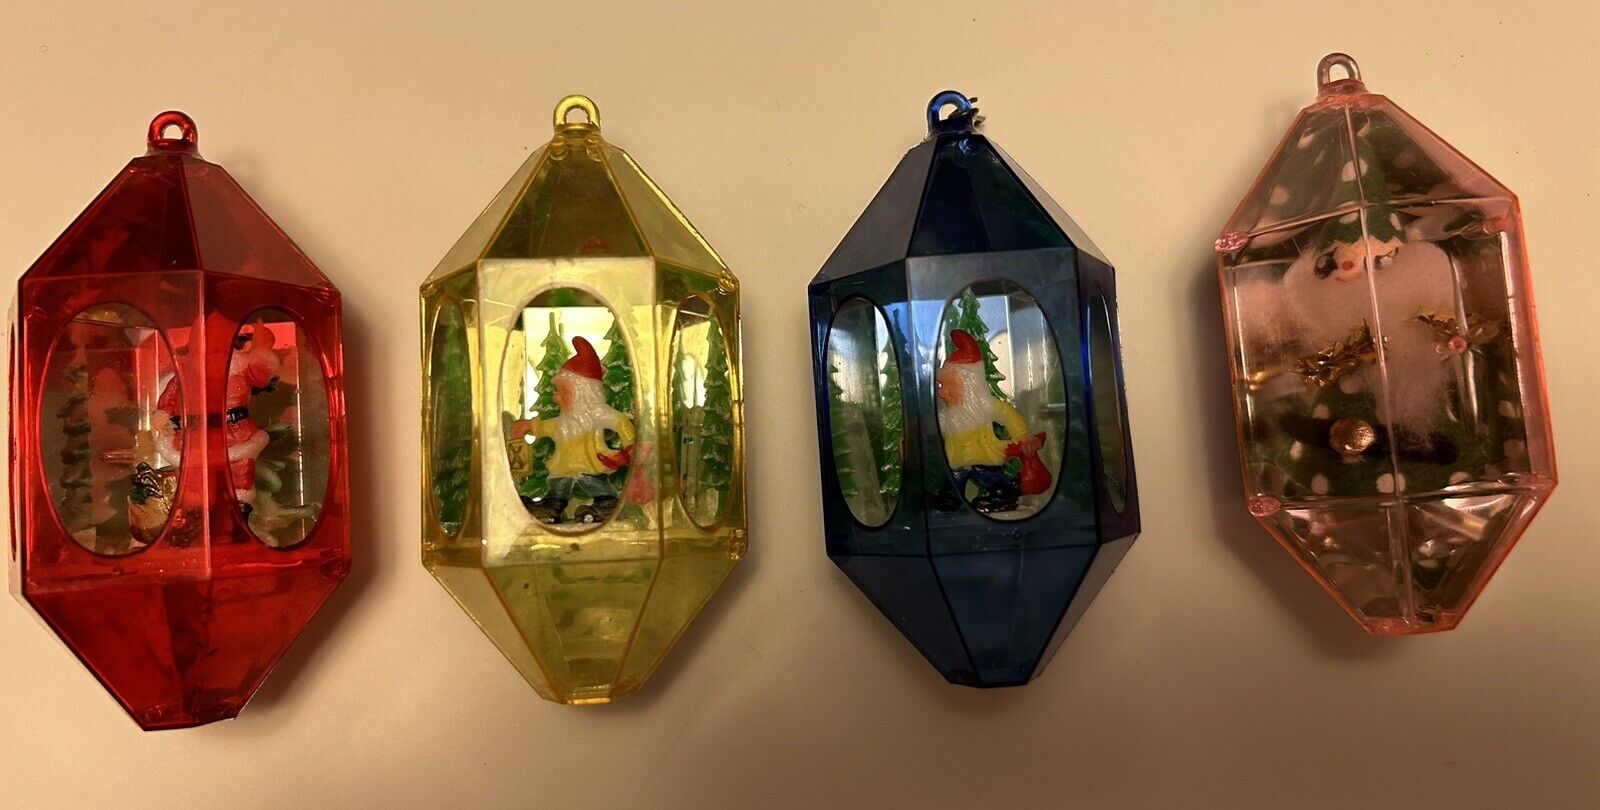 VTG JEWEL BRITE Plastic Christmas Diorama Ornaments- Lot Of 4 Circa- 1960’s